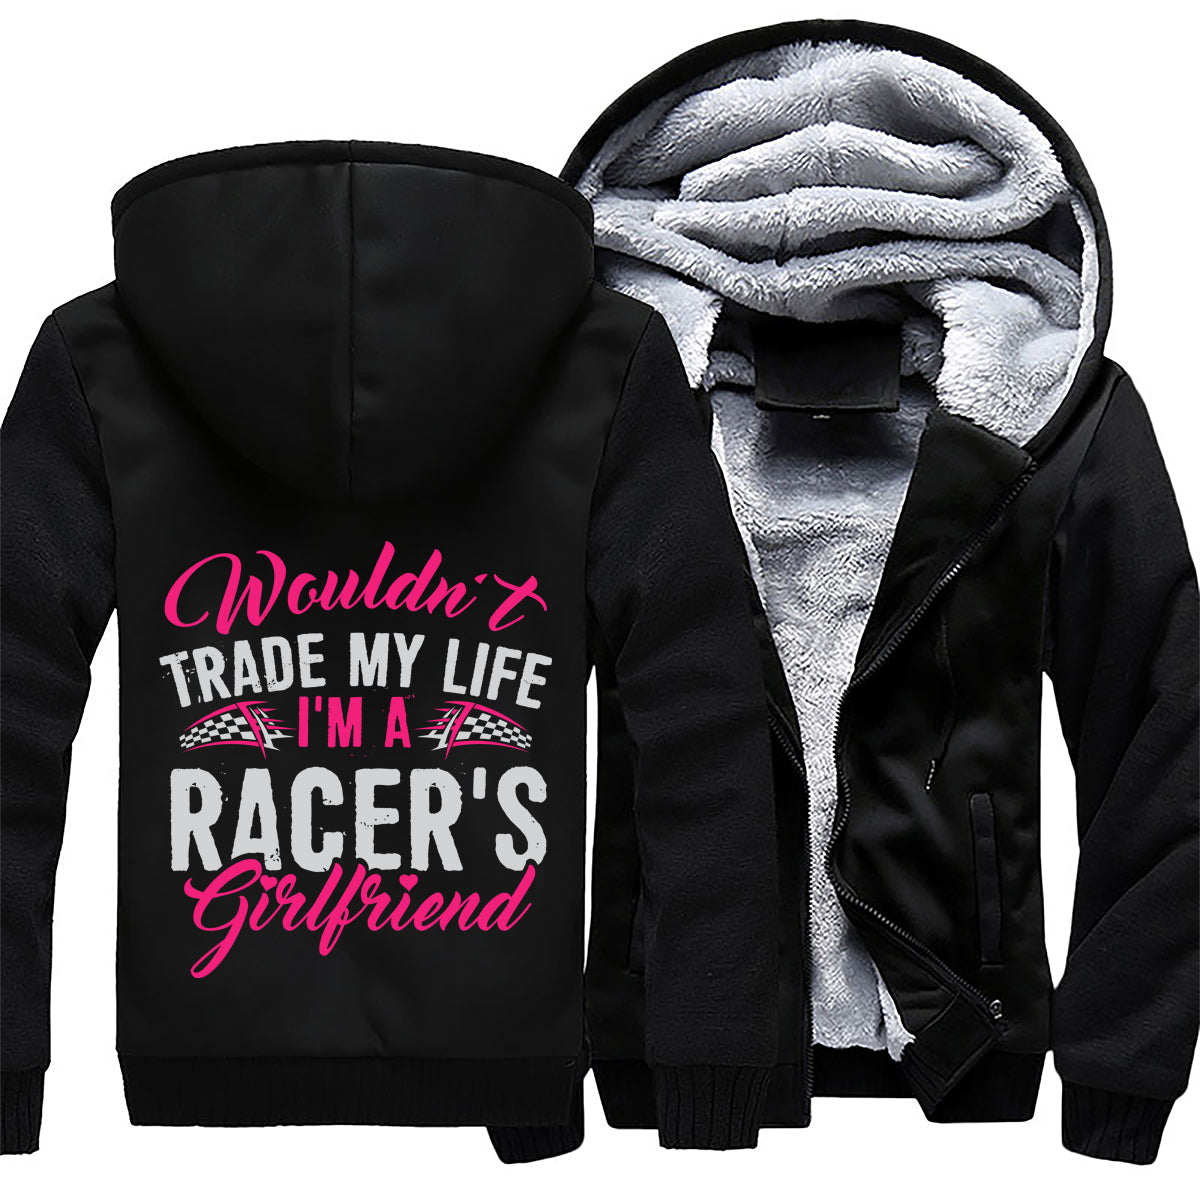 I'm A Racer's Girlfriend Jacket 